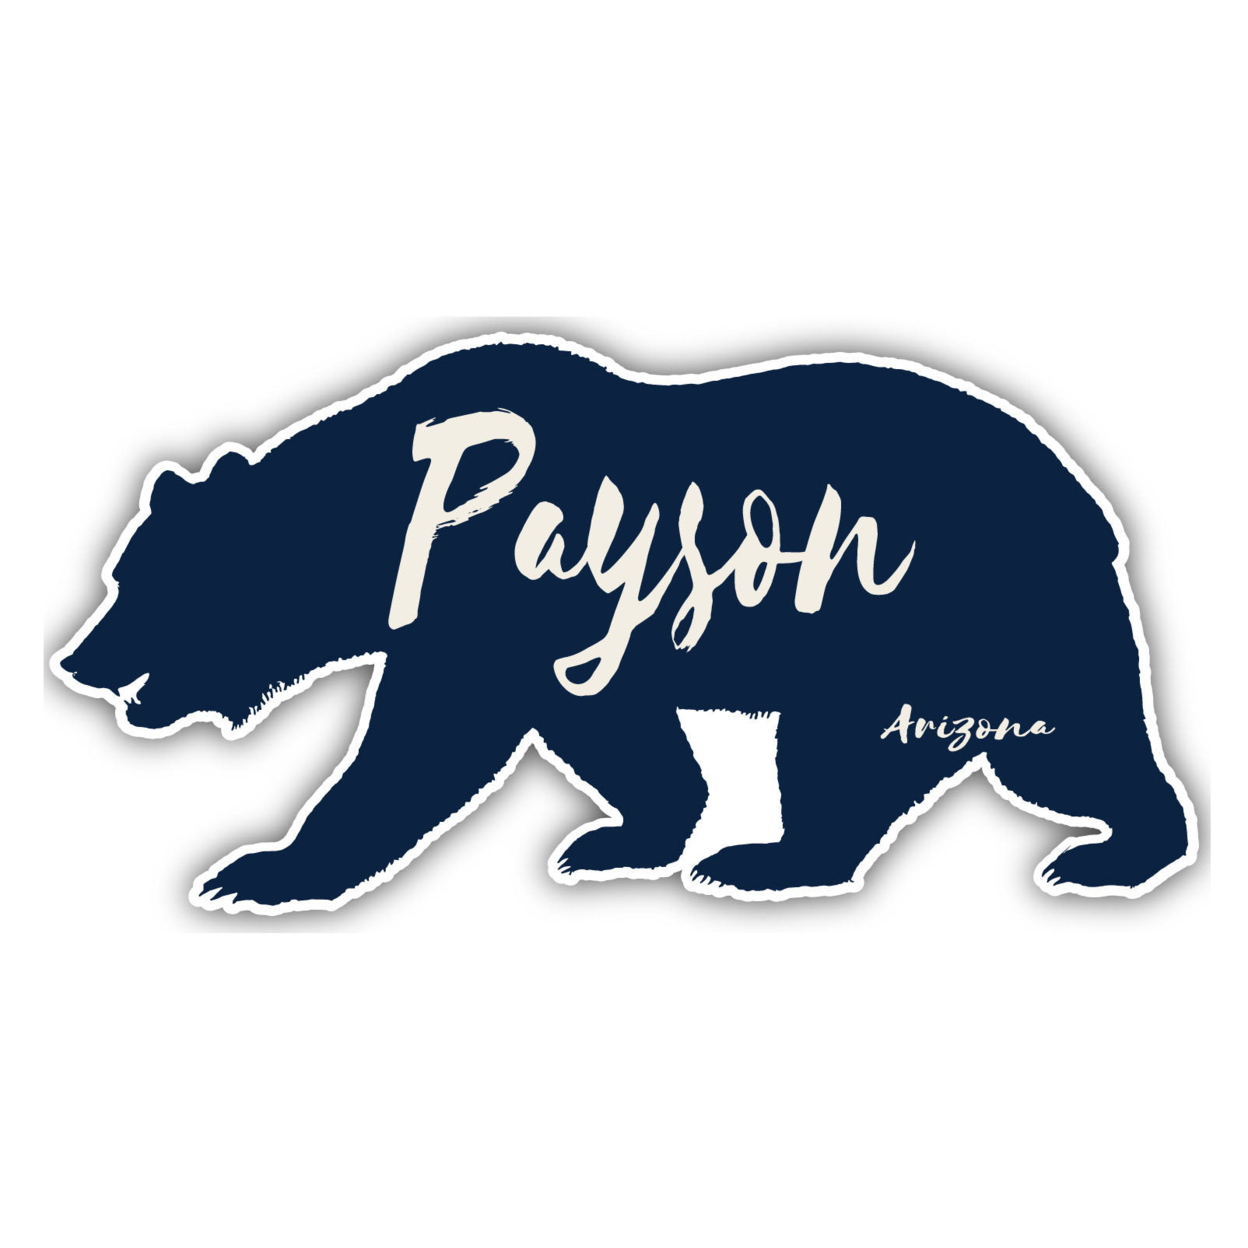 Payson Arizona Souvenir Decorative Stickers (Choose Theme And Size) - Single Unit, 4-Inch, Bear